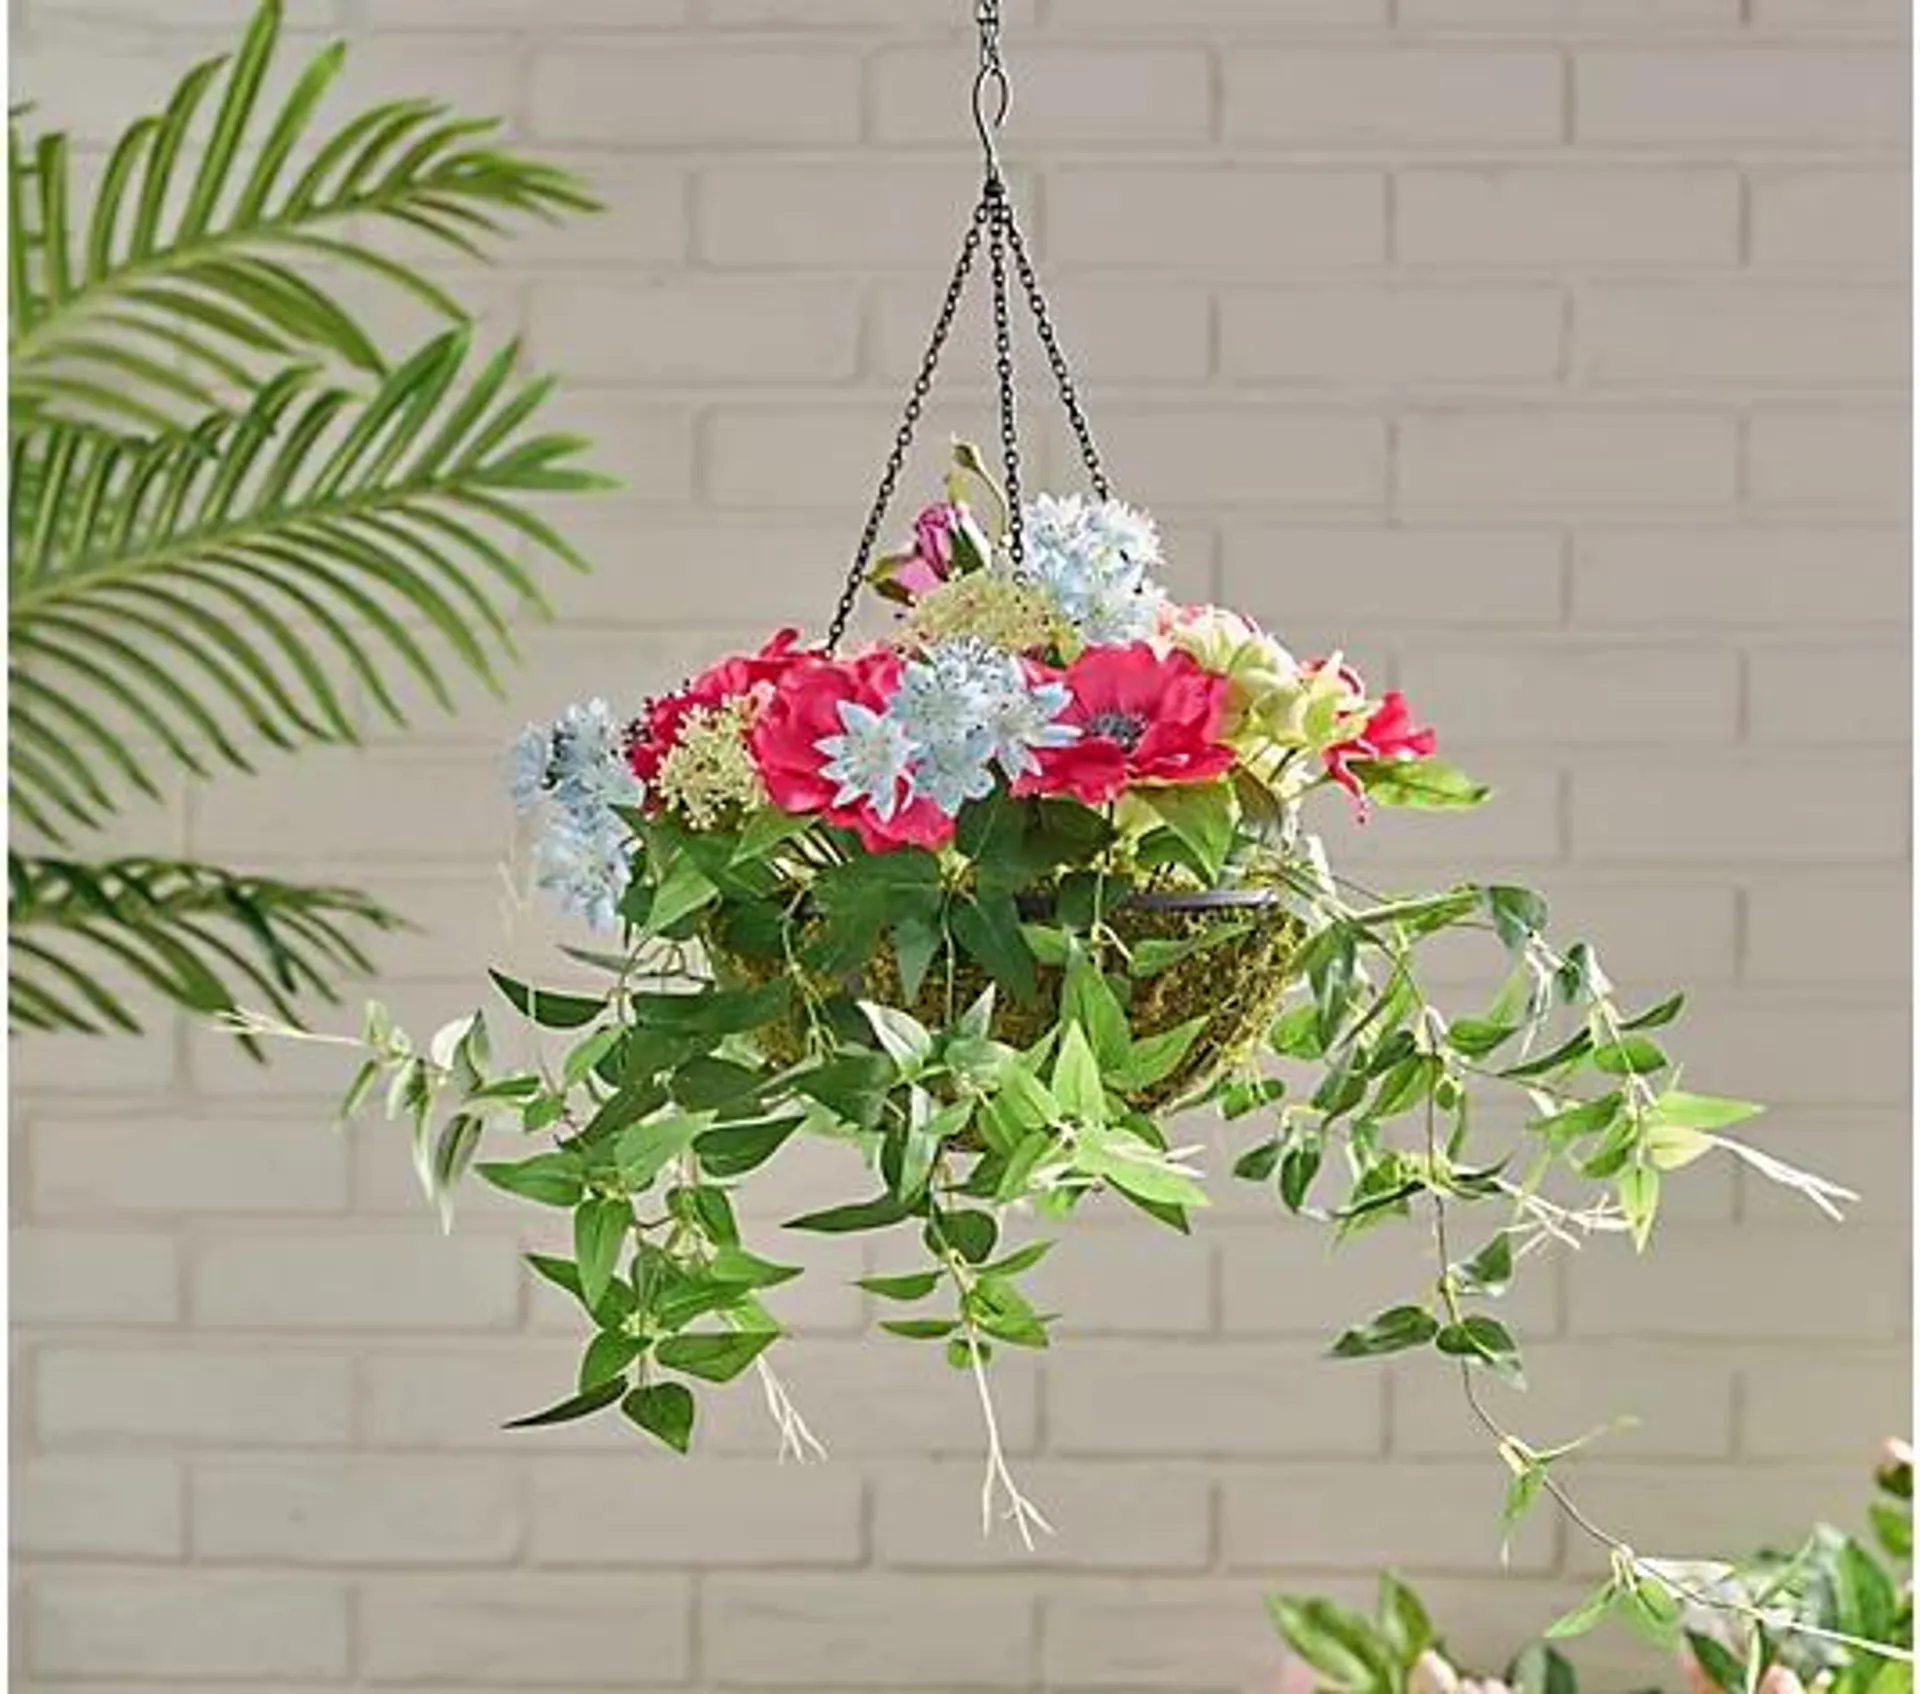 Barbara King 15" Indoor/ Outdoor Mixed Faux Floral Hanging Basket